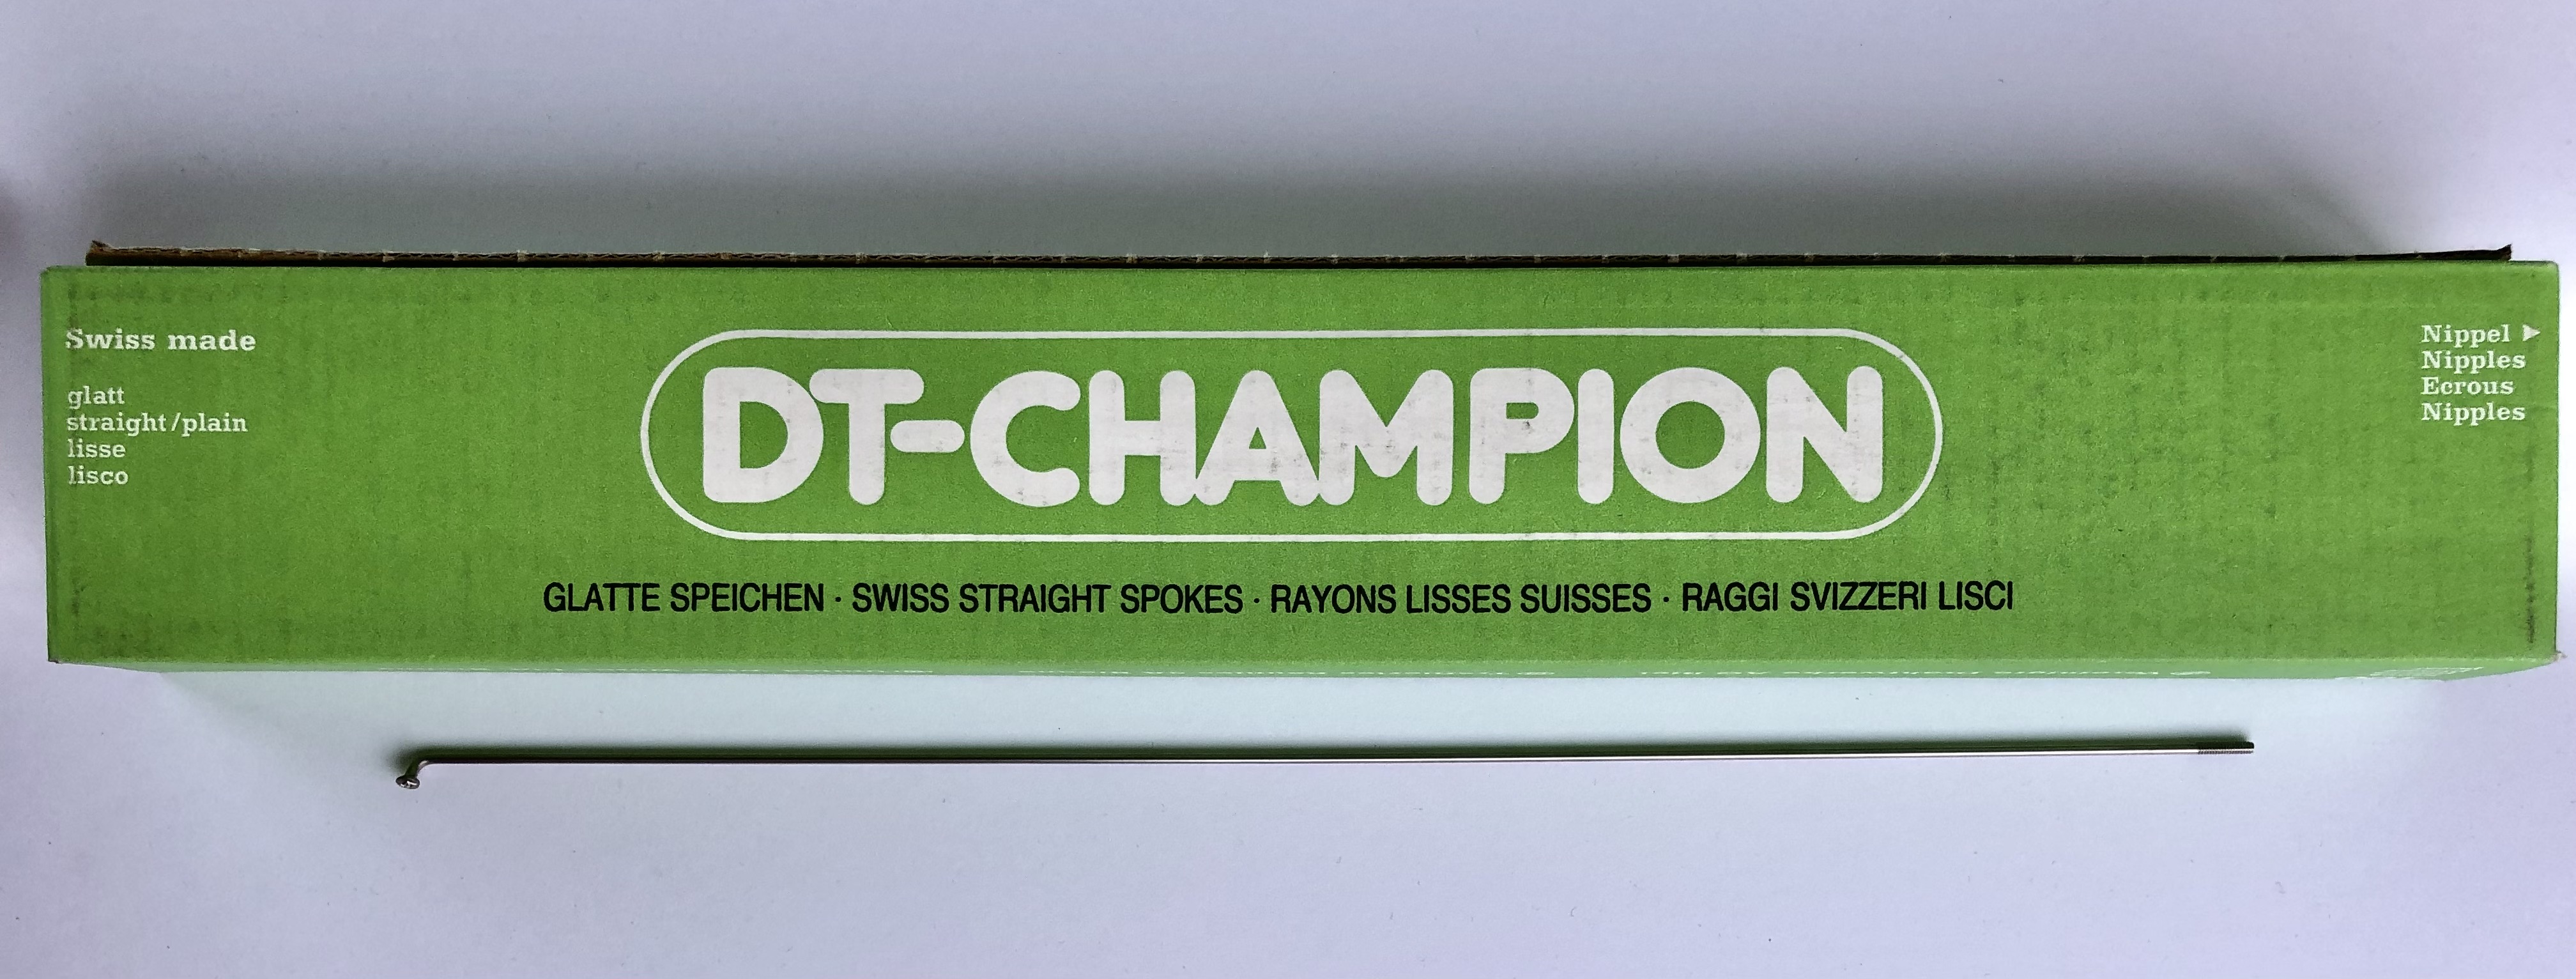 DT-Champion Rayon 1.8 x 256 argent